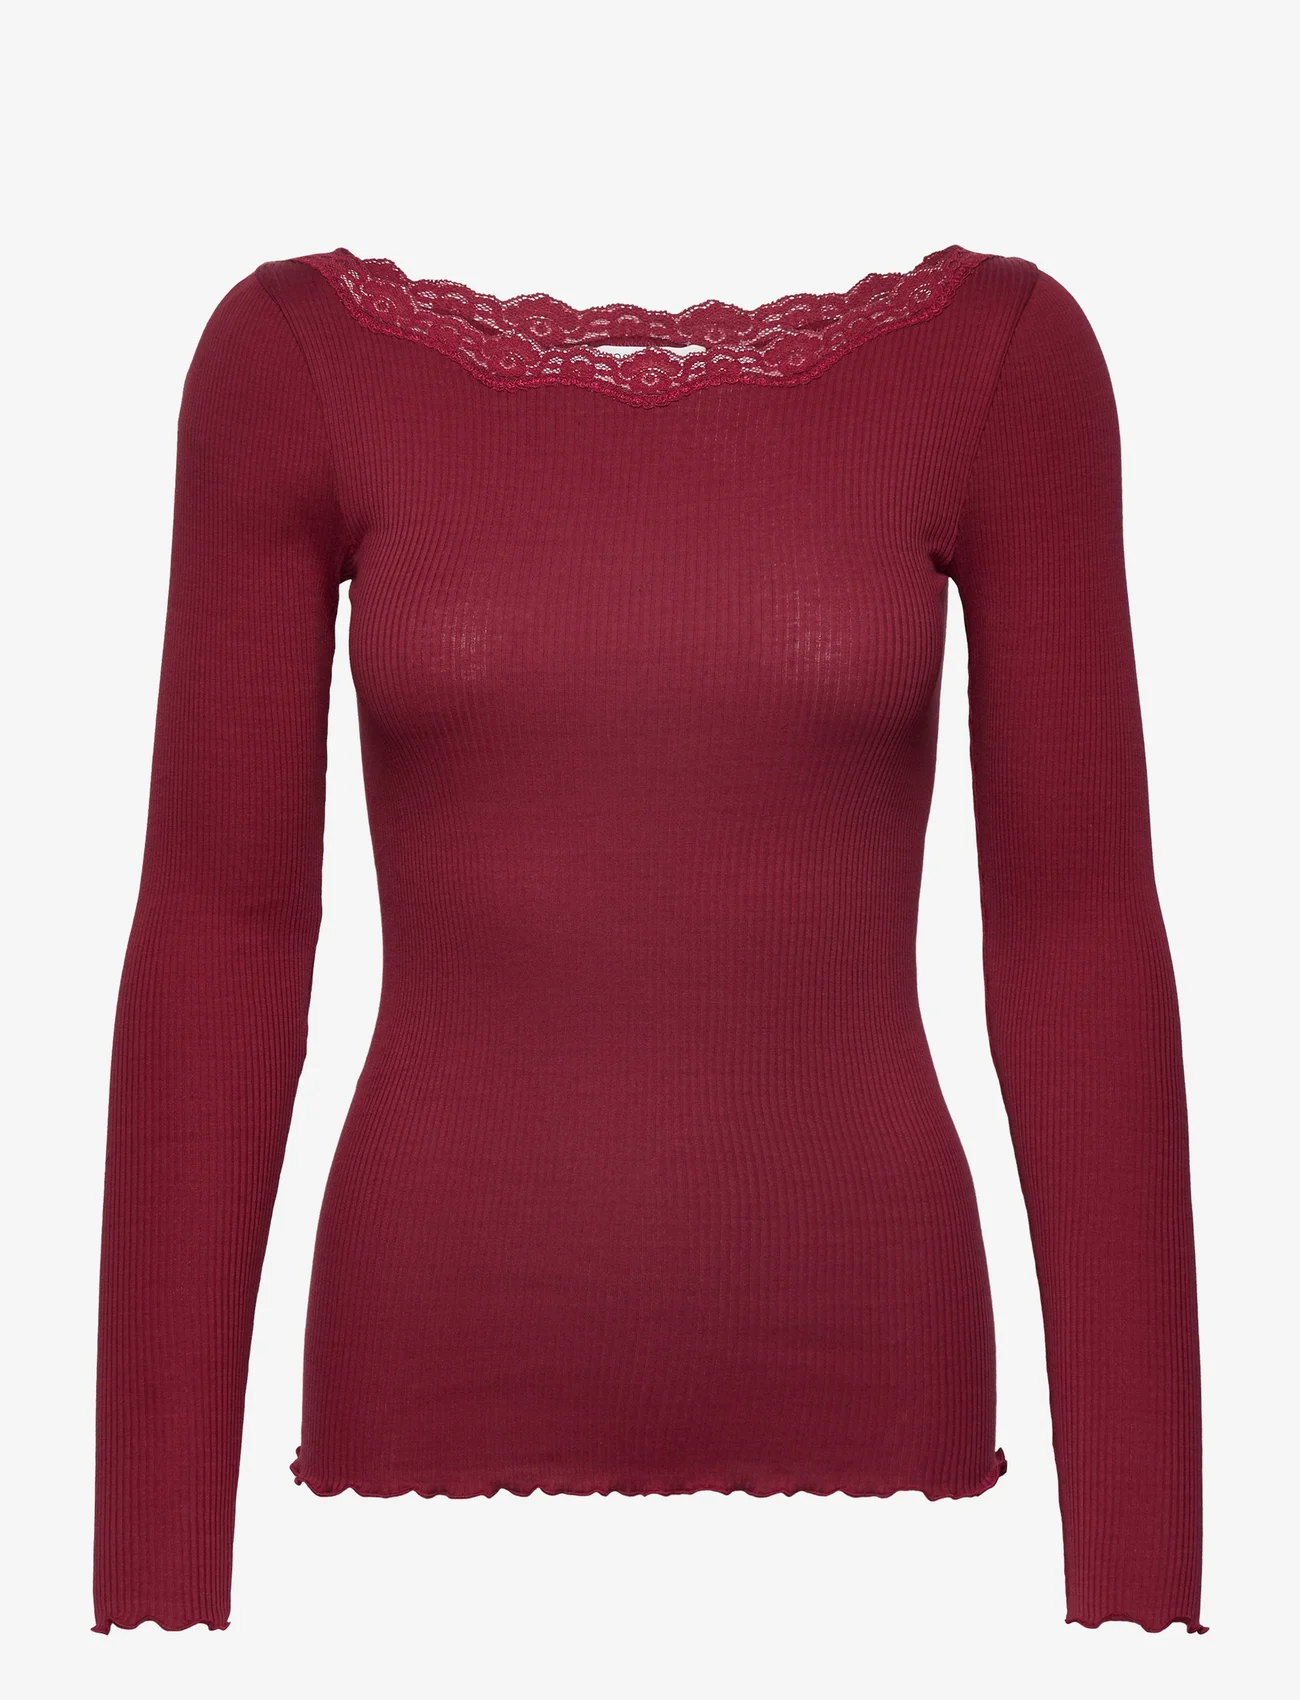 Rosemunde - Organic t-shirt w/lace - t-shirts & tops - cabernet - 0